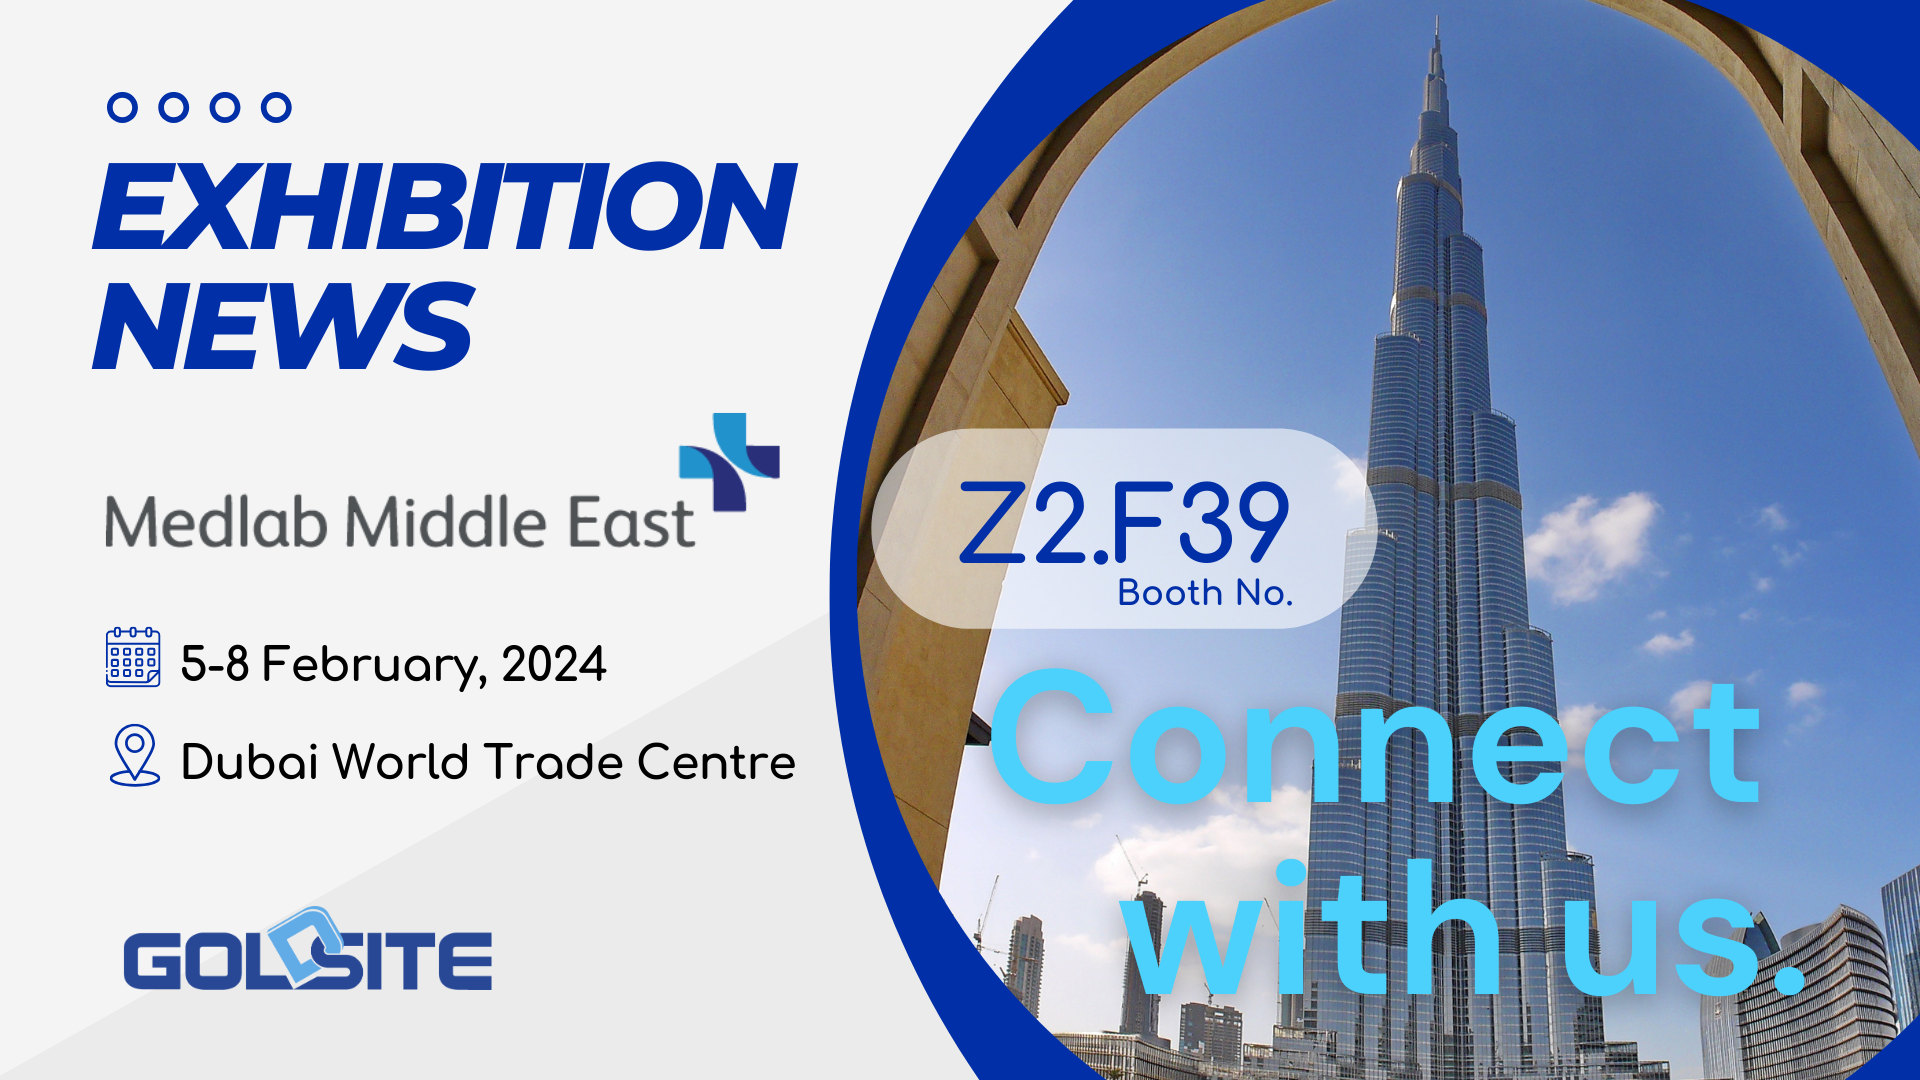 Próximos eventos: Goldsite para exhibir en Medlab Middle East 2024